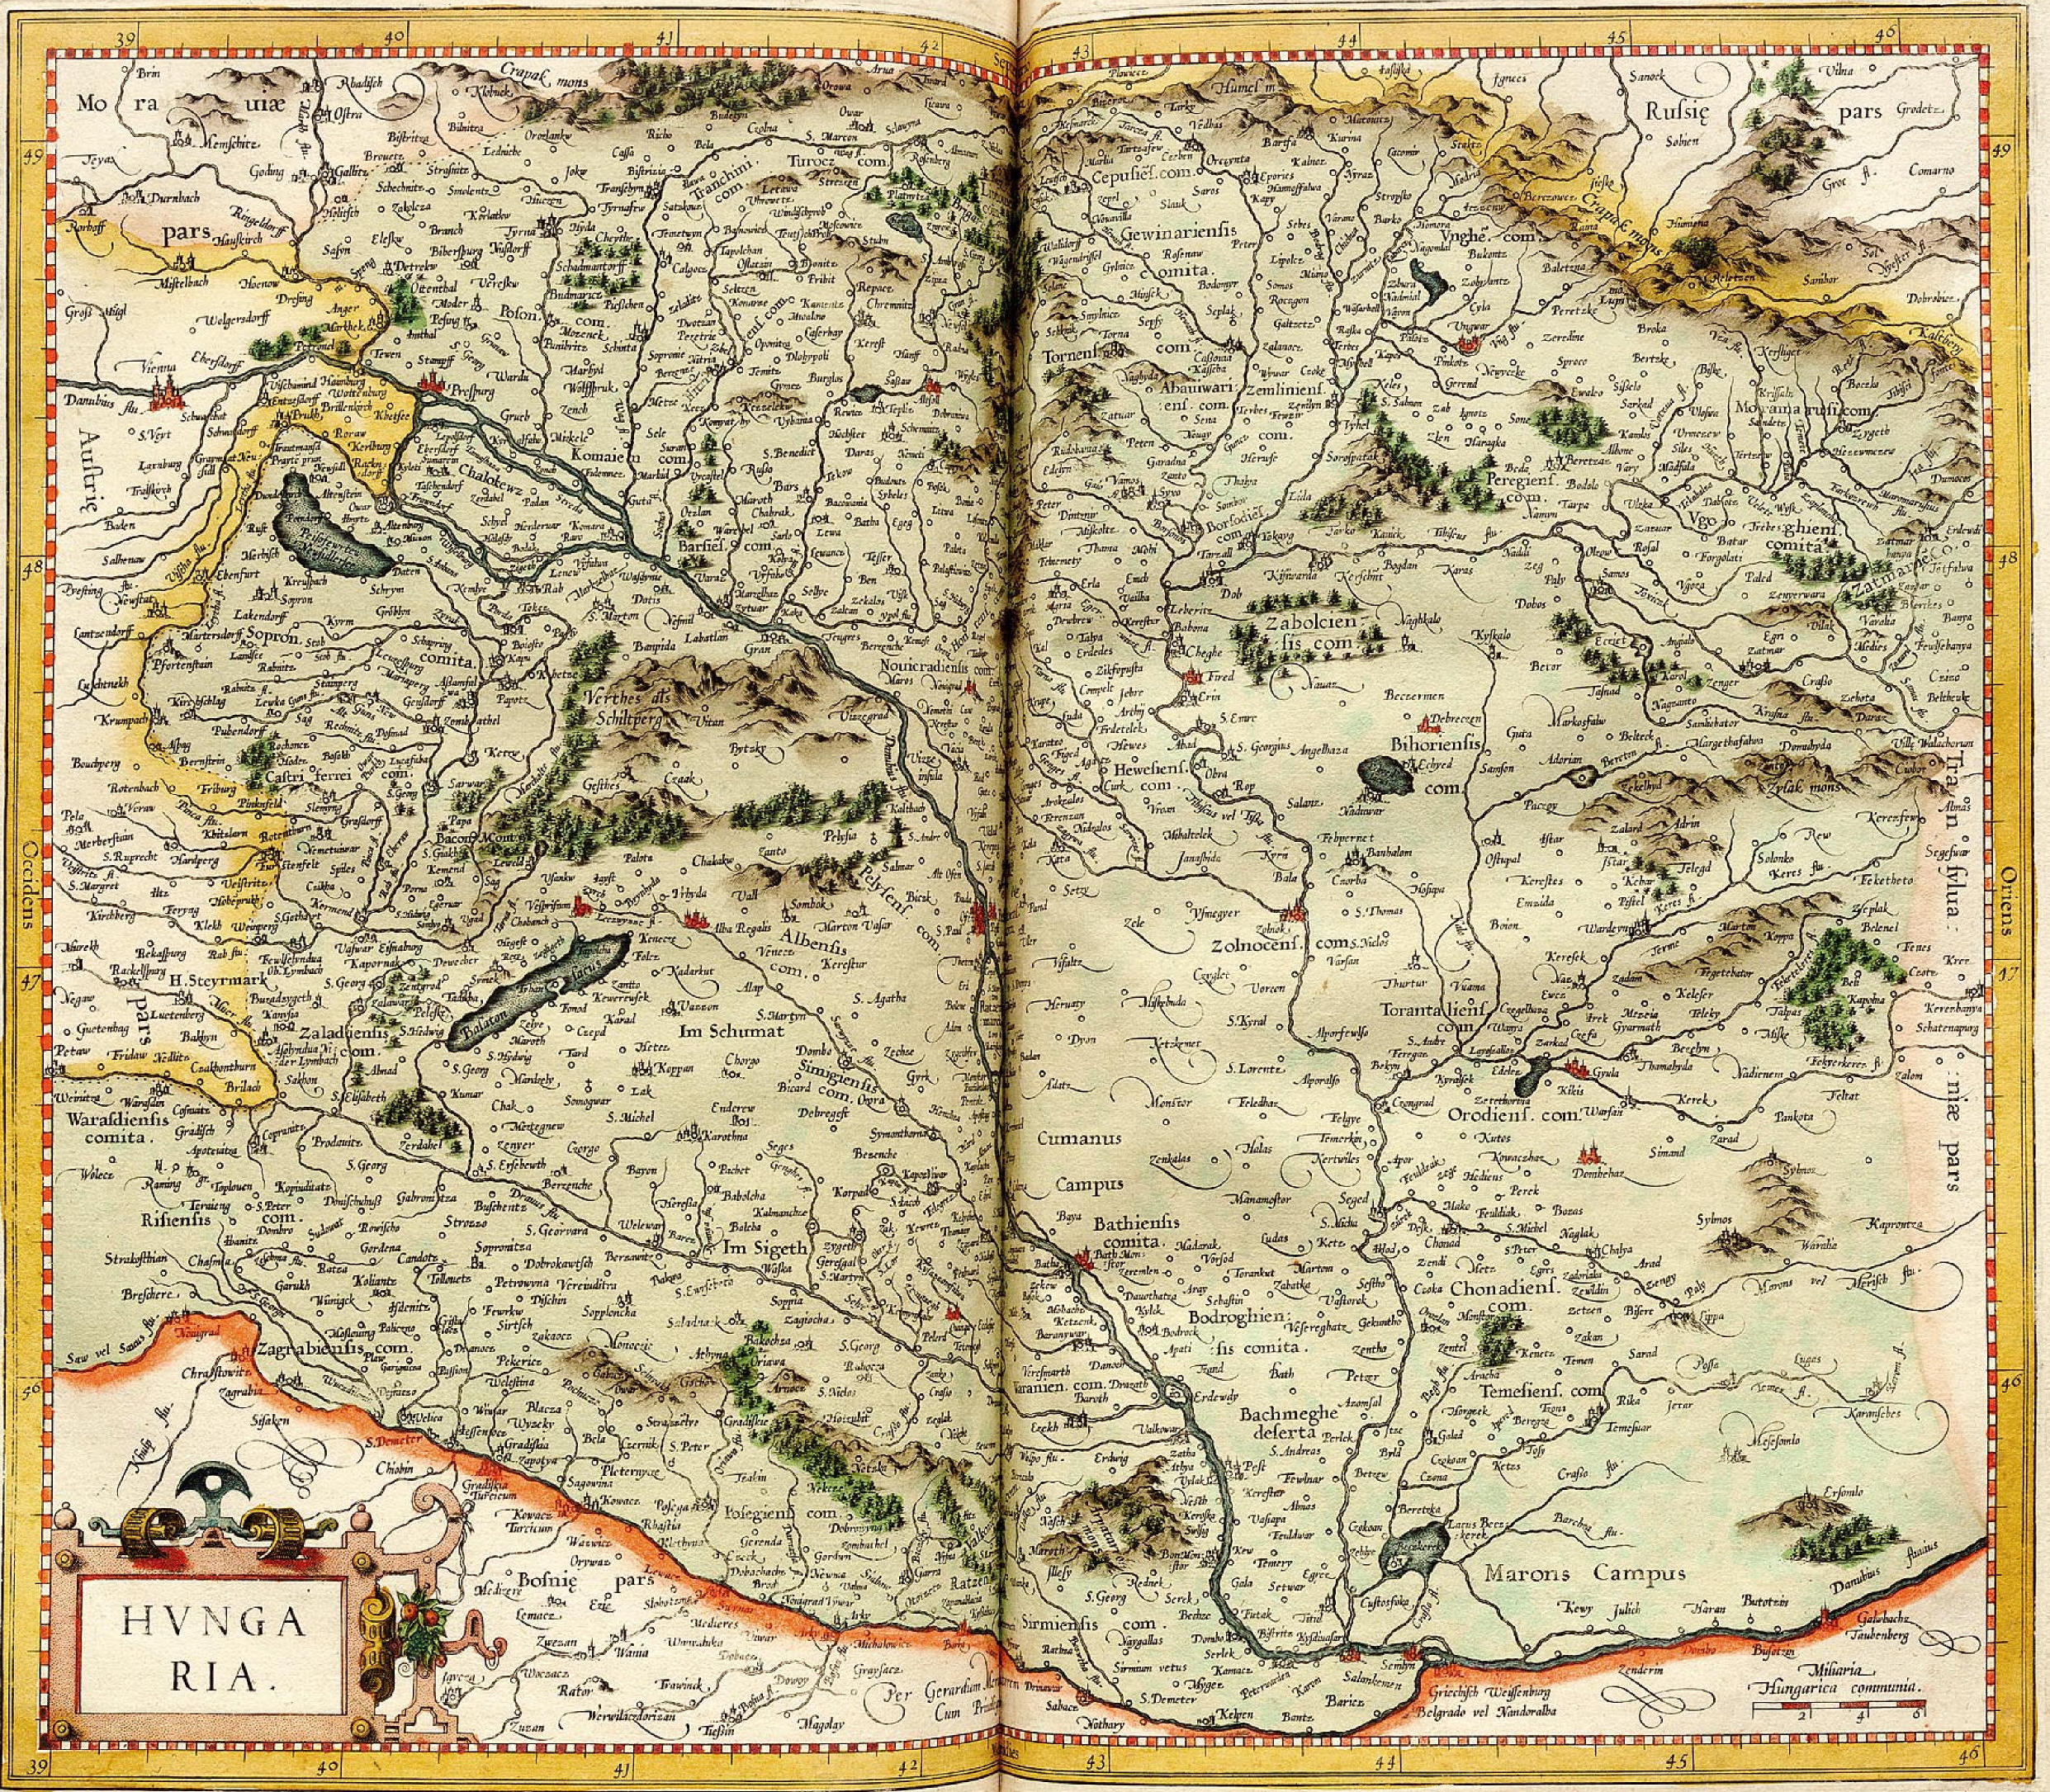 Atlas Cosmographicae (Mercator) 225-Hungaria